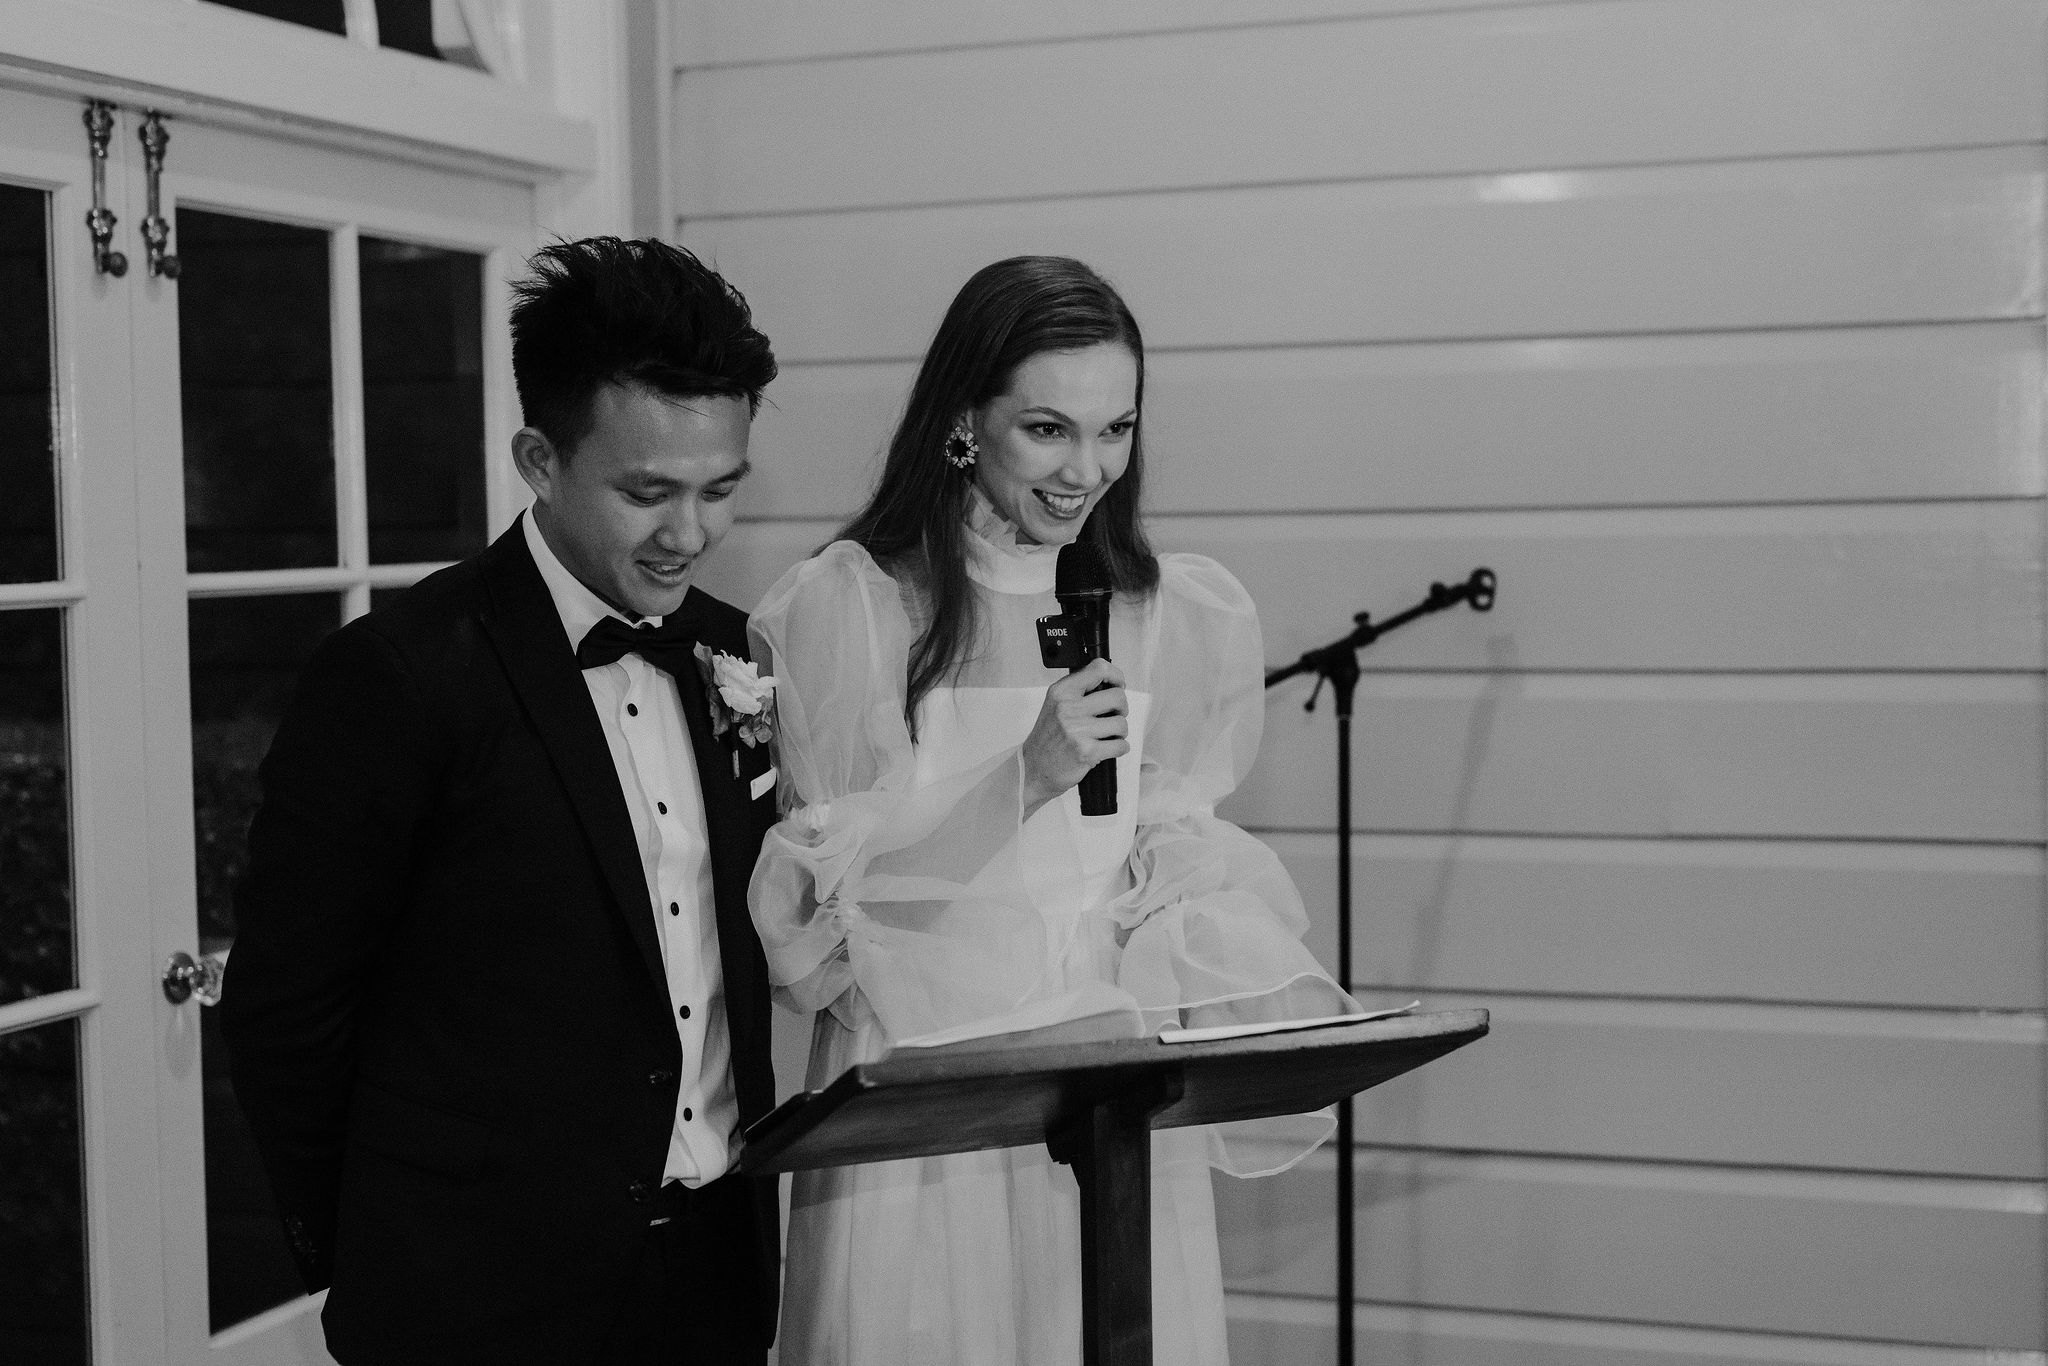 Bride giving speech